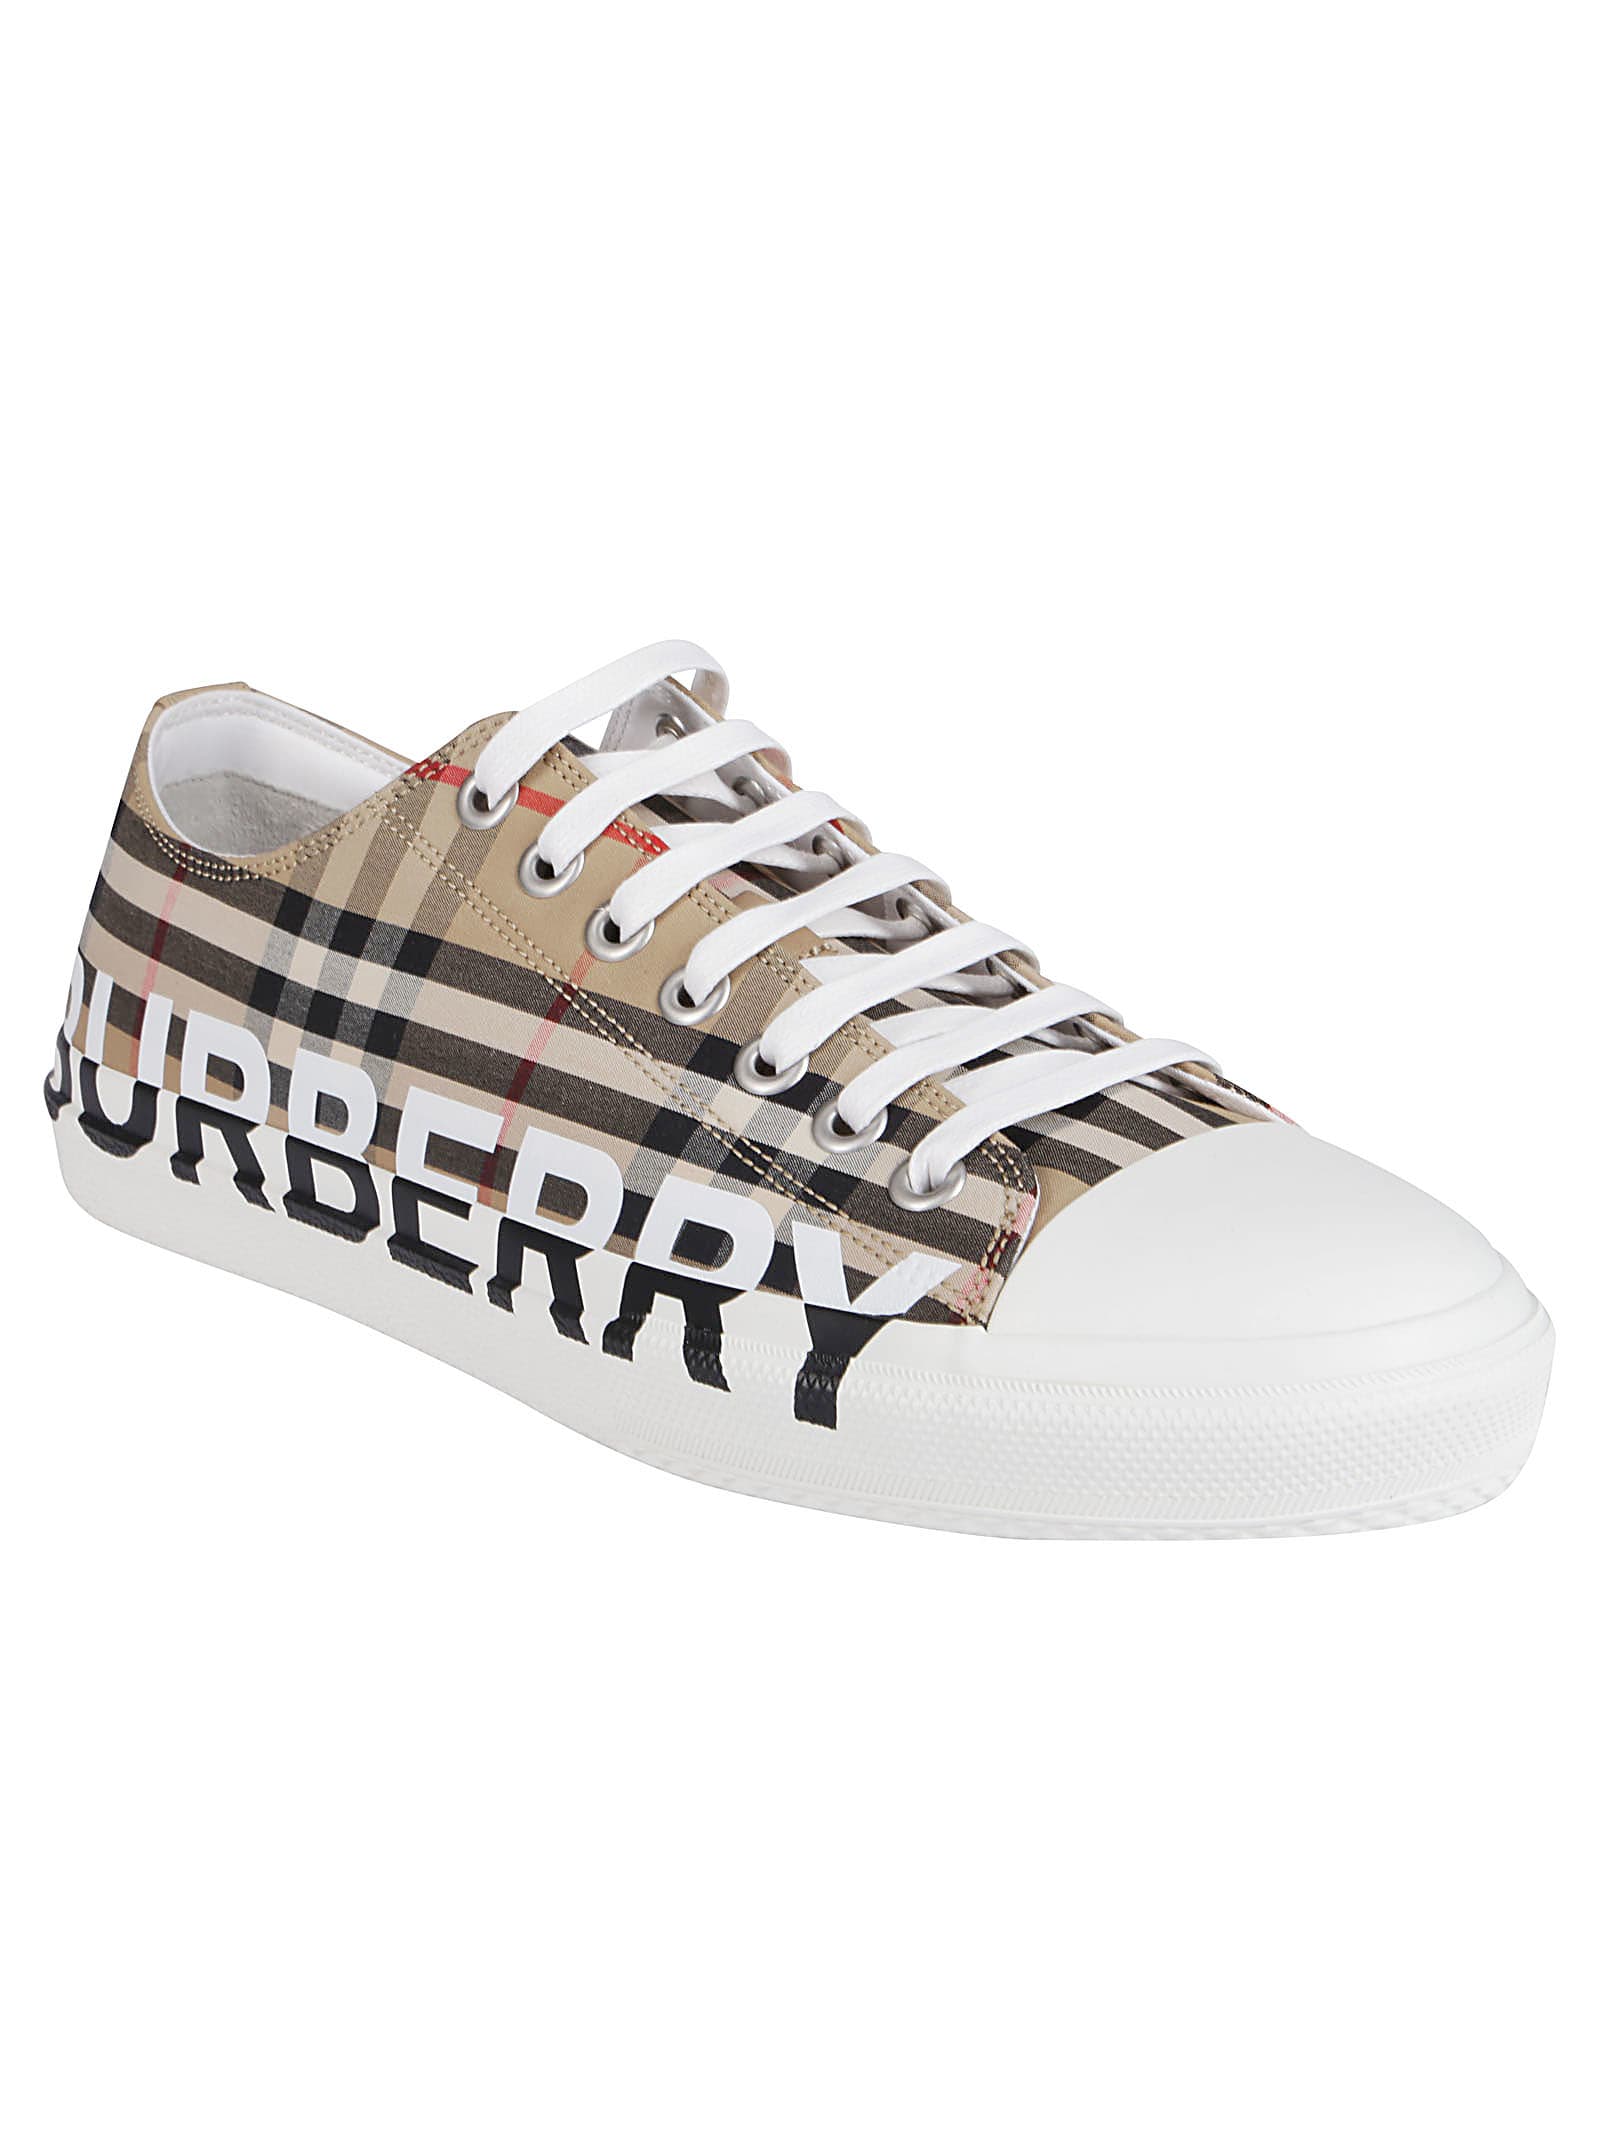 burberry logo print sneakers